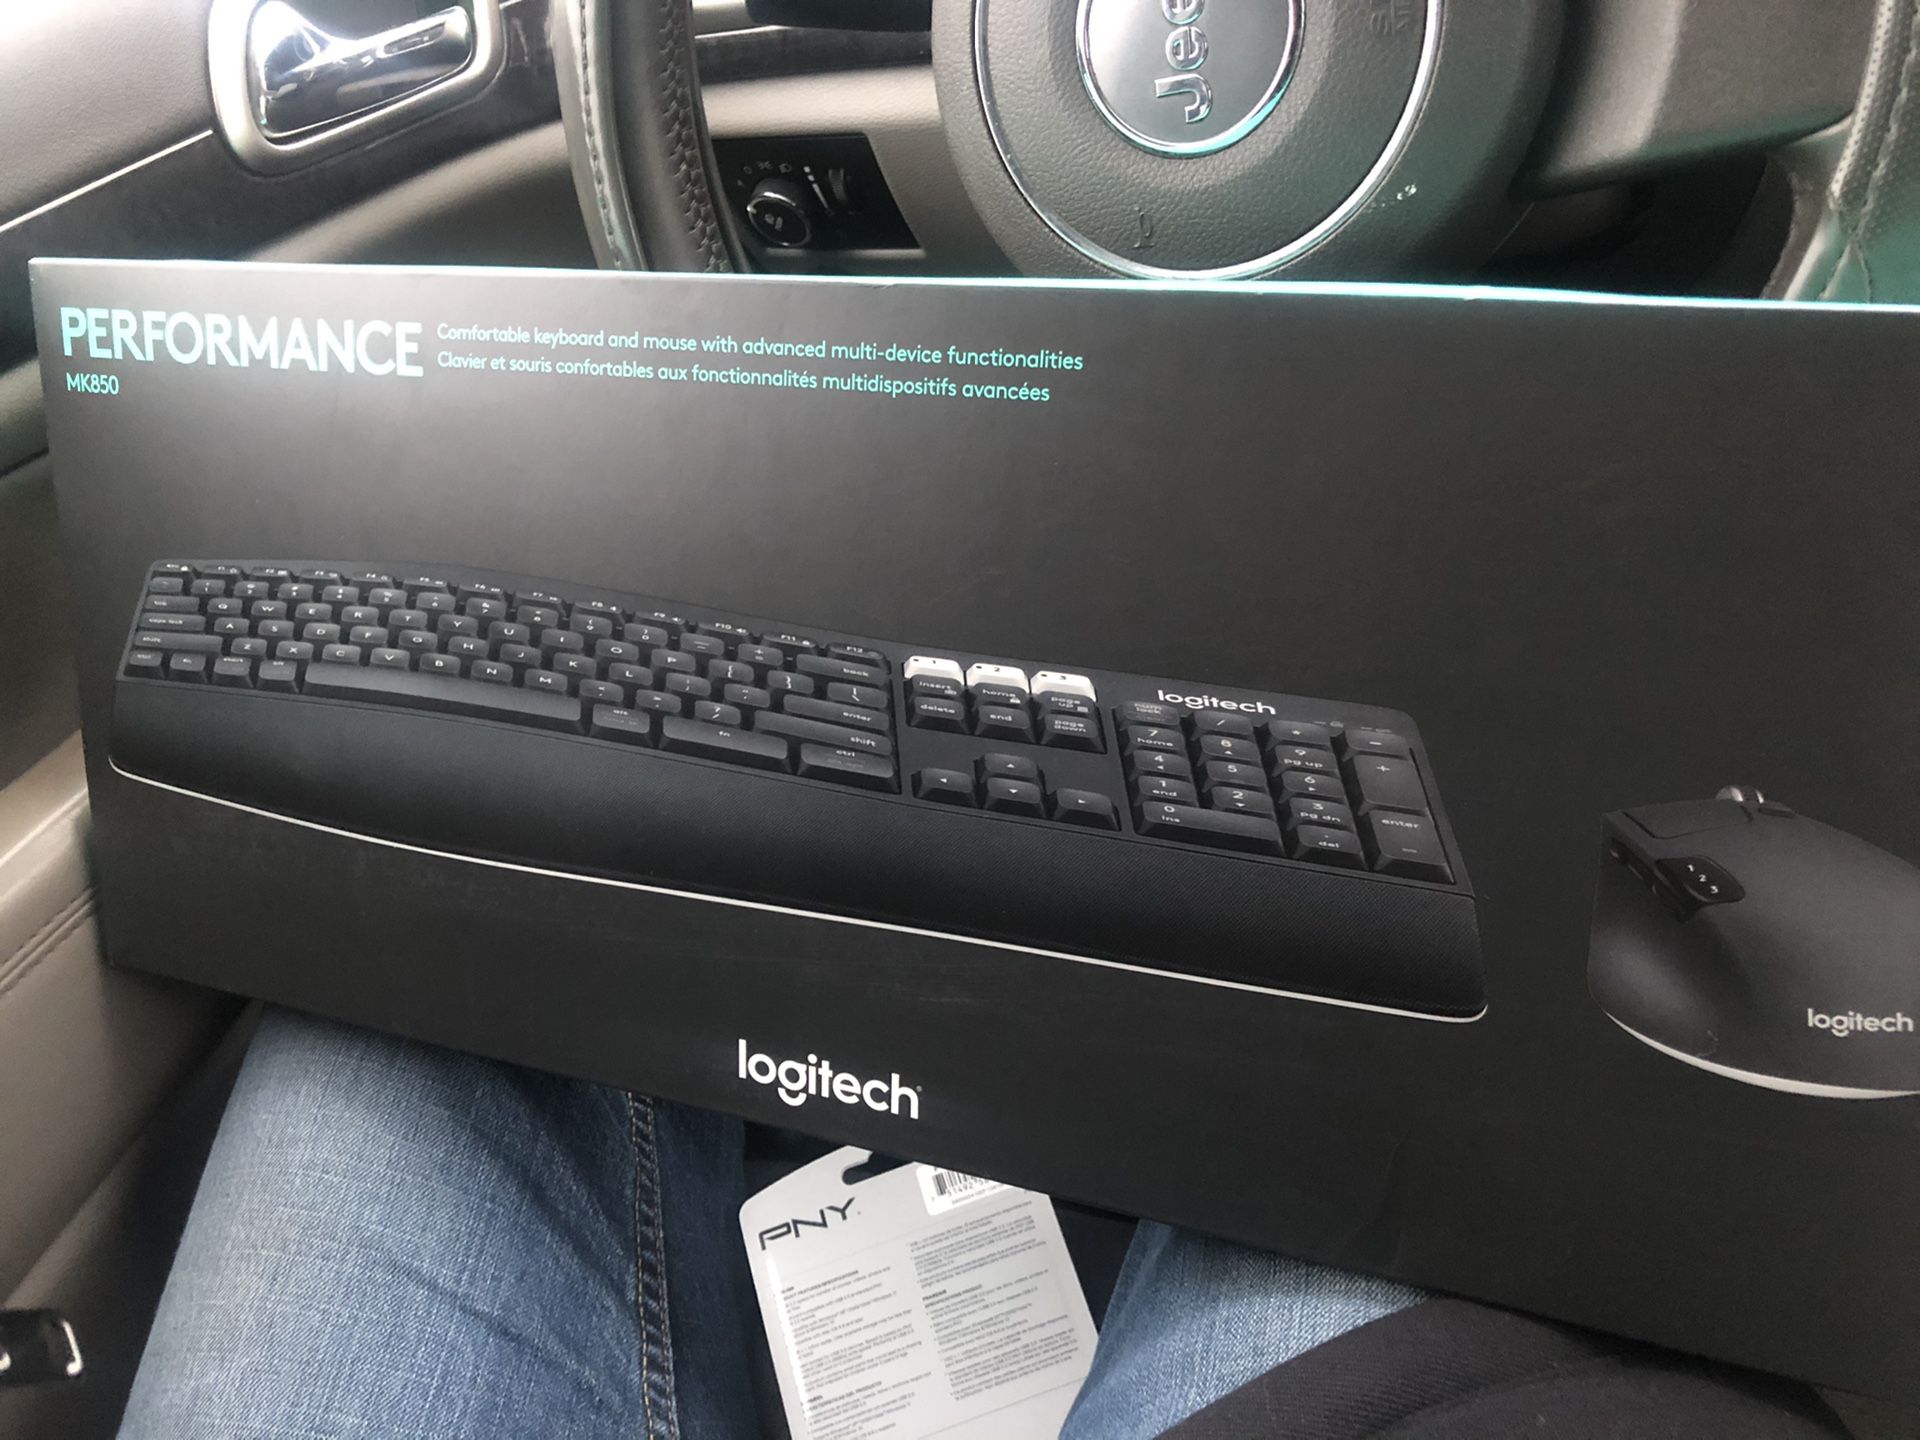 Logitech MK850 keyboard and mouse